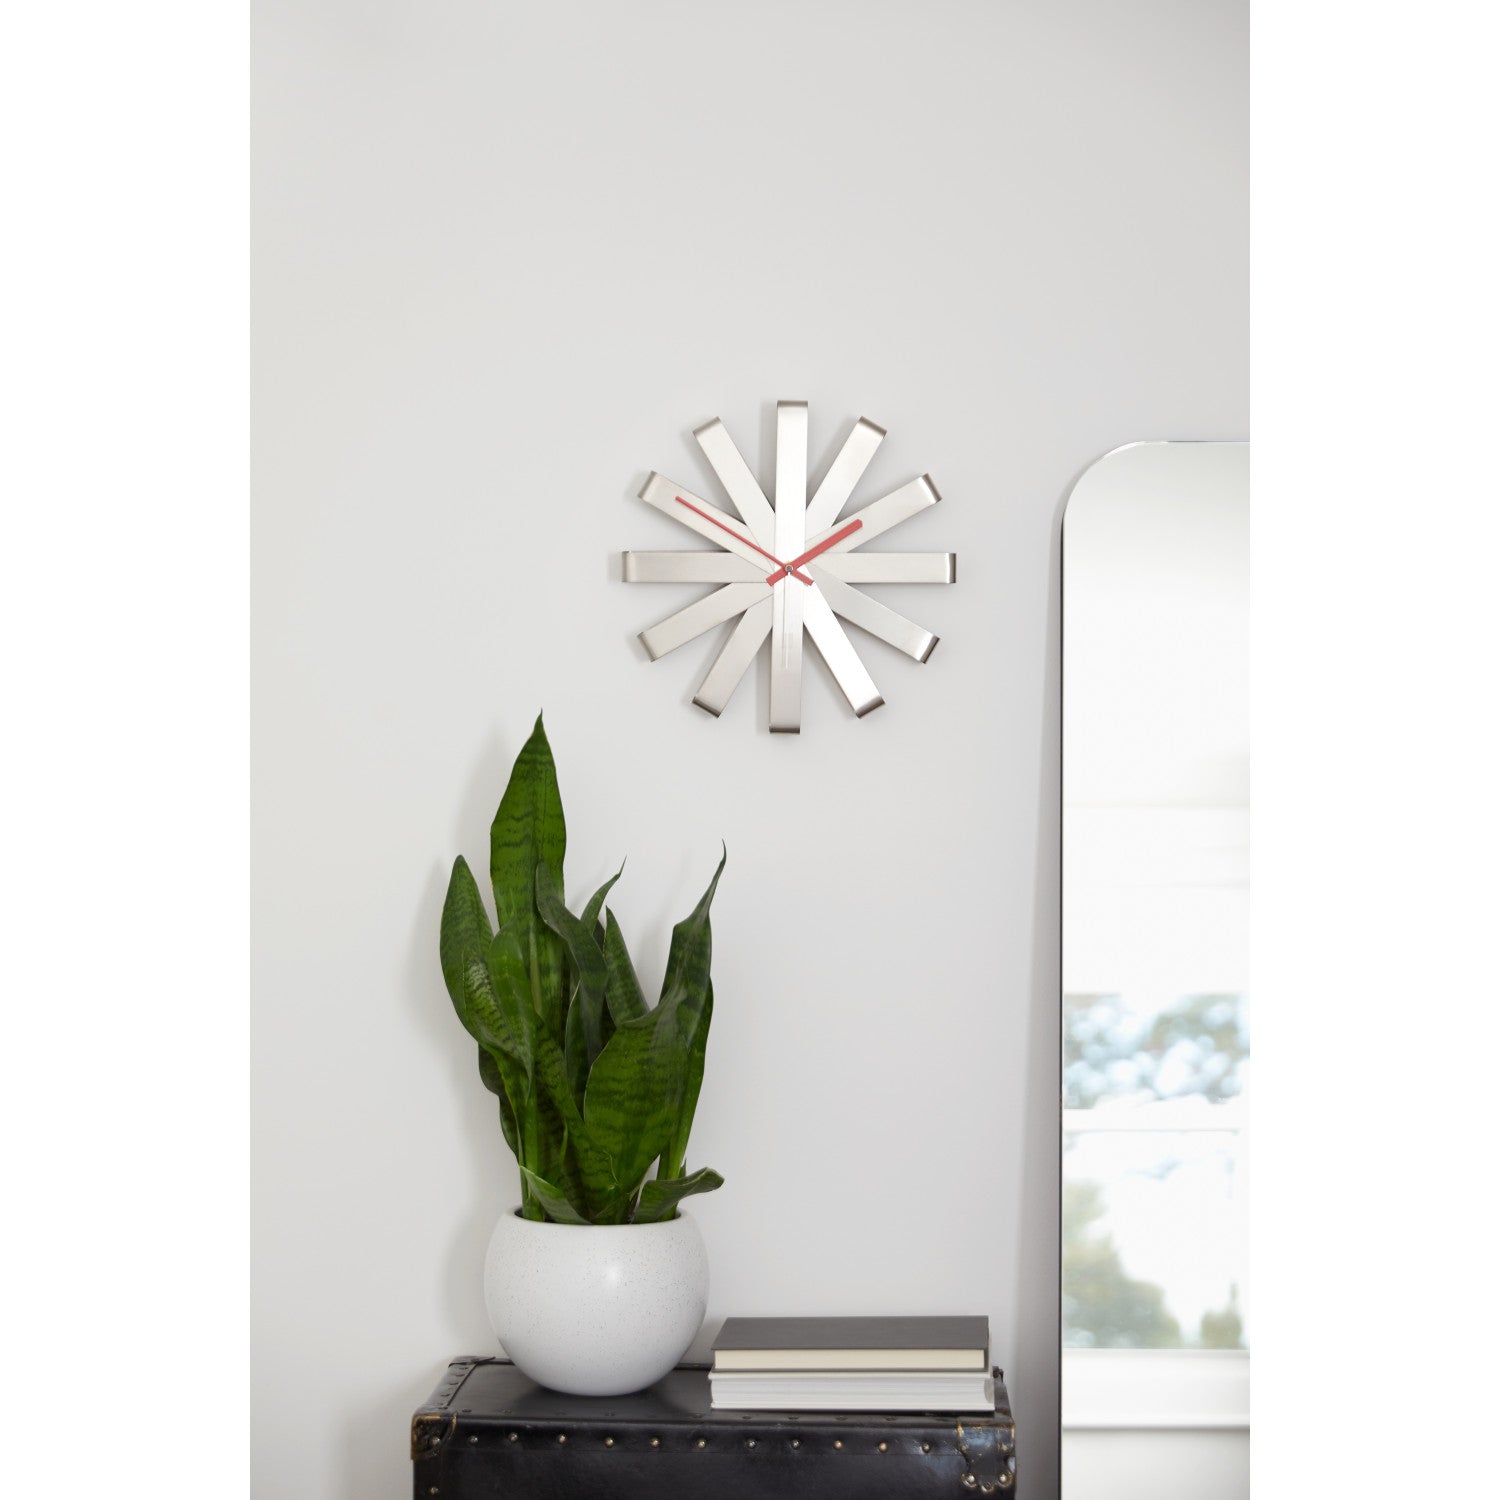 Umbra Ribbon Wall Clock - Stainless-Steel